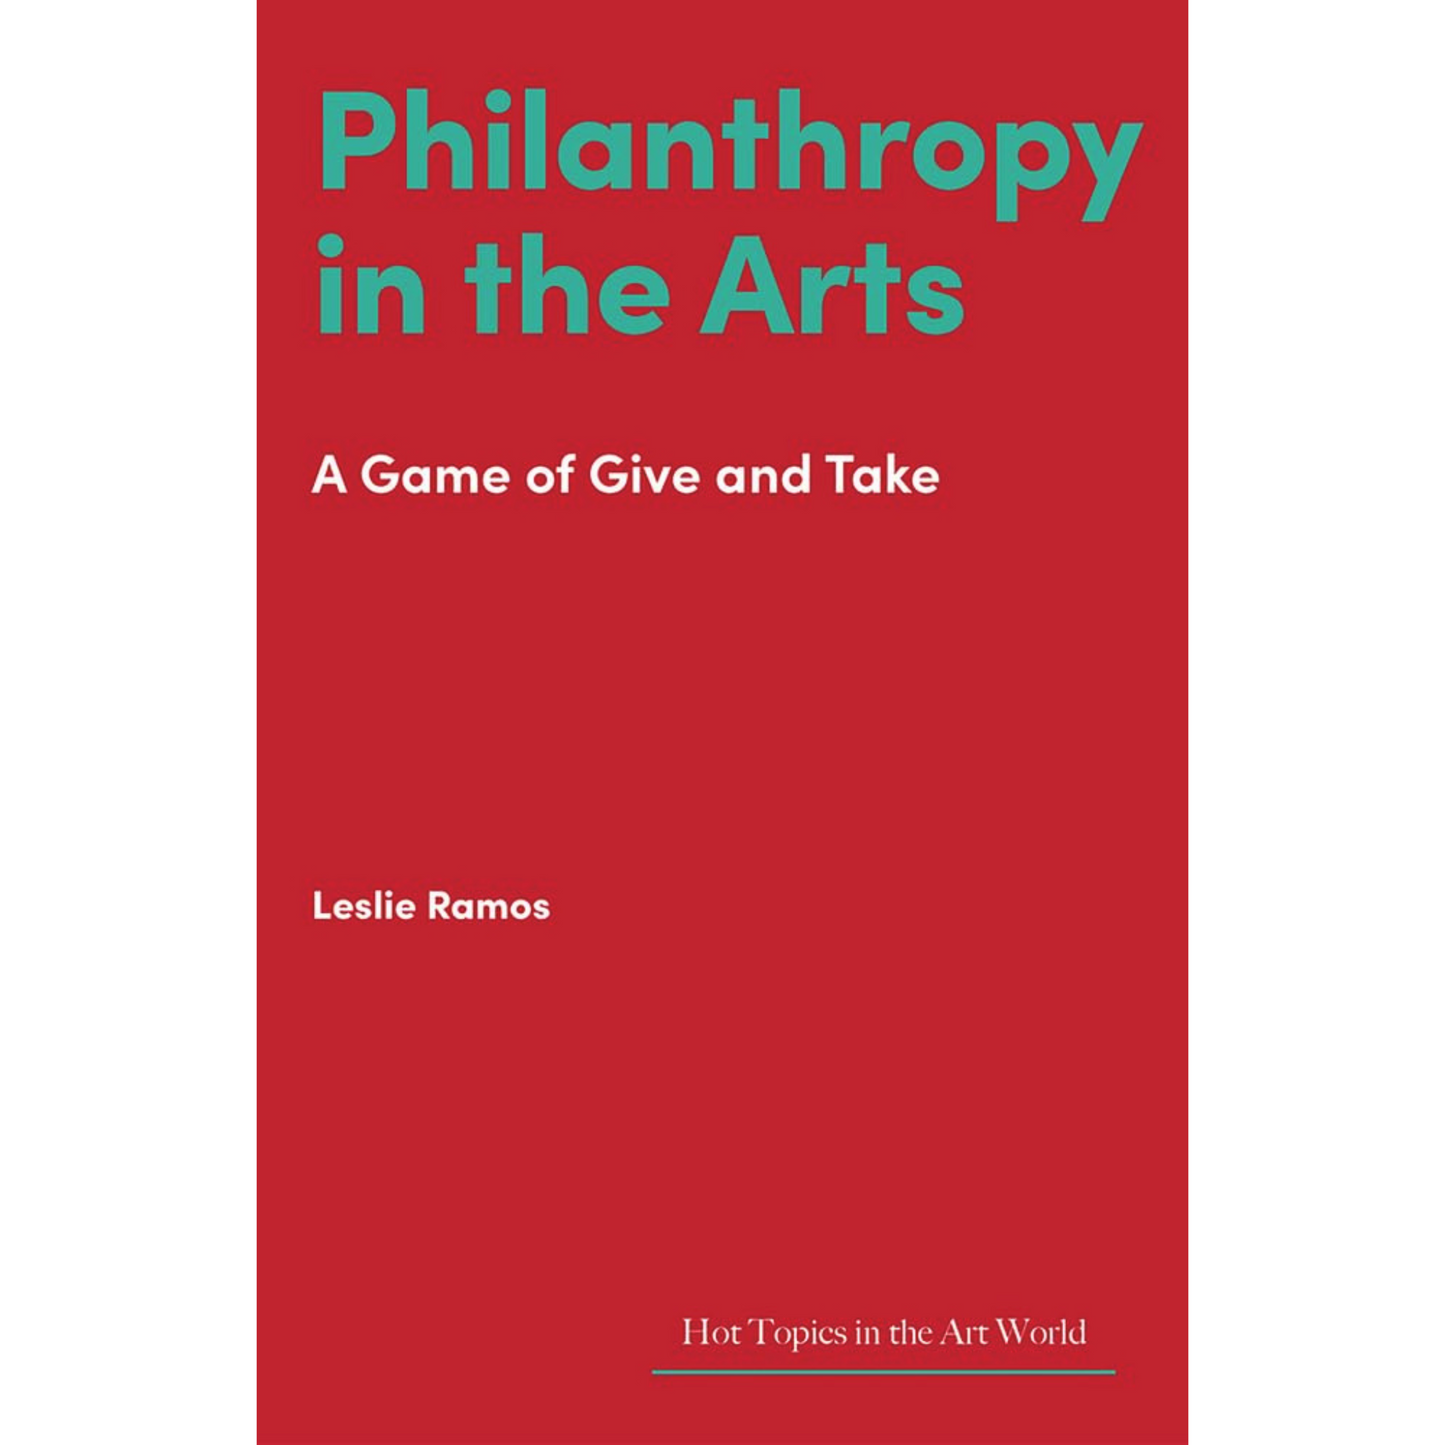 Philanthropy in the Arts